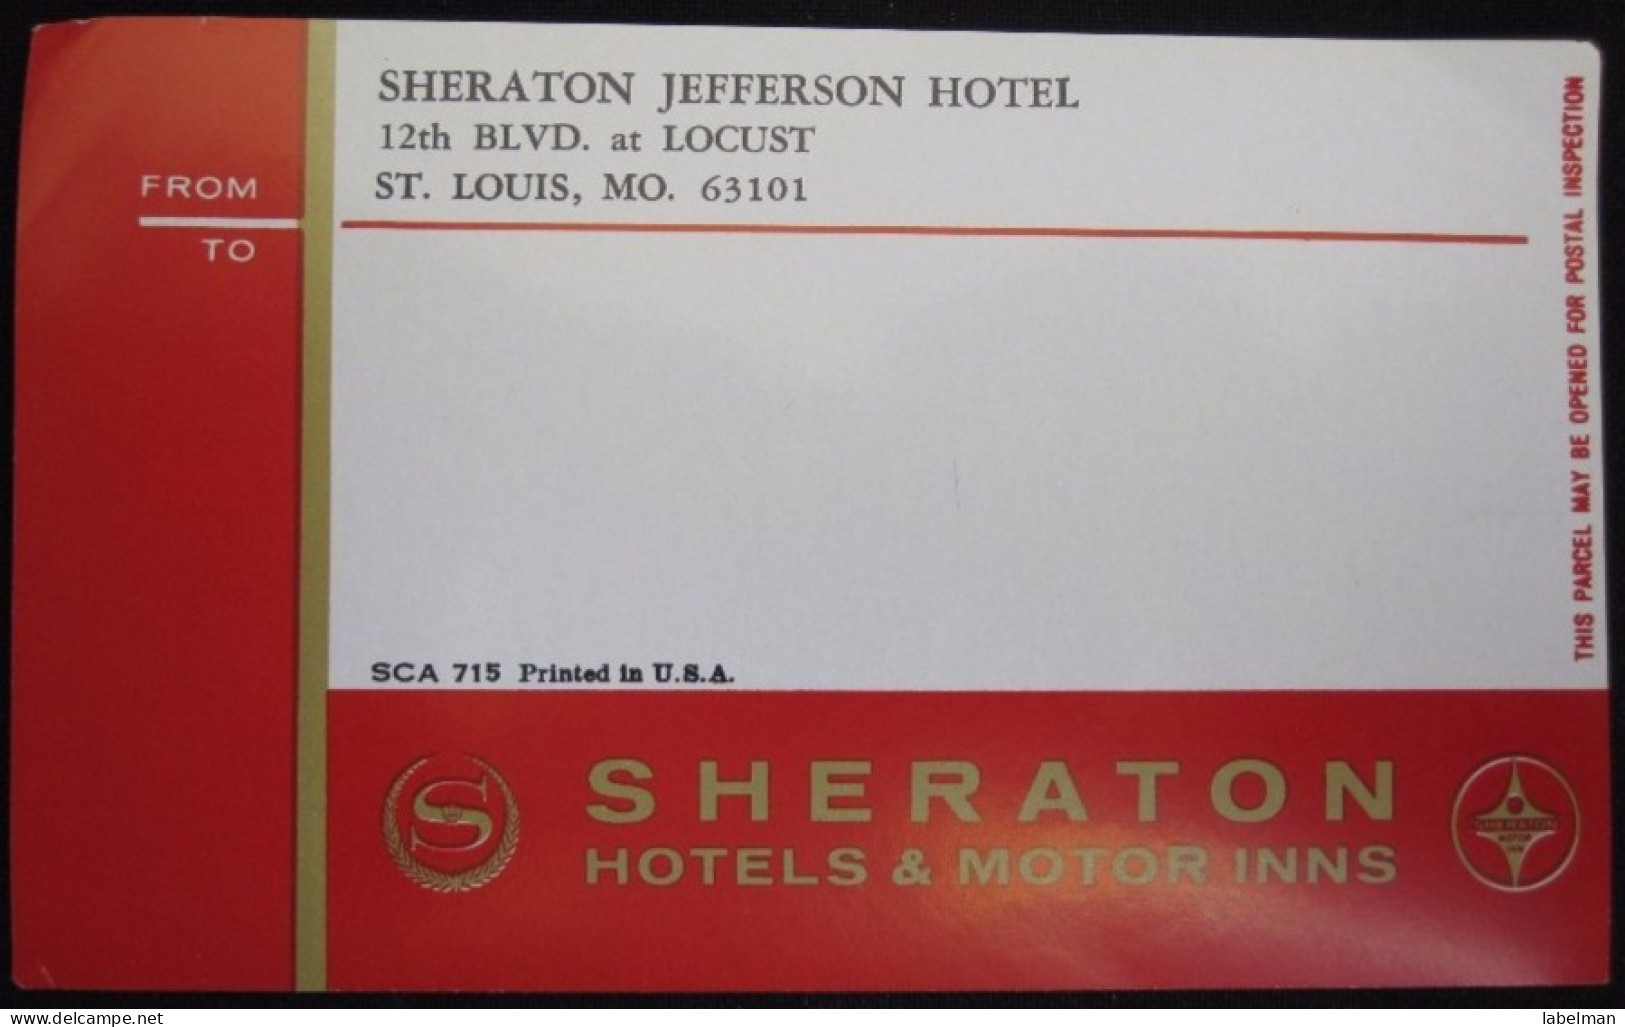 HOTEL MOTOR INN SHERATON JEFFERSON LOCUST MISSOURI USA UNITED STATES LUGGAGE LABEL ETIQUETTE AUFKLEBER DECAL STICKER - Hotel Labels